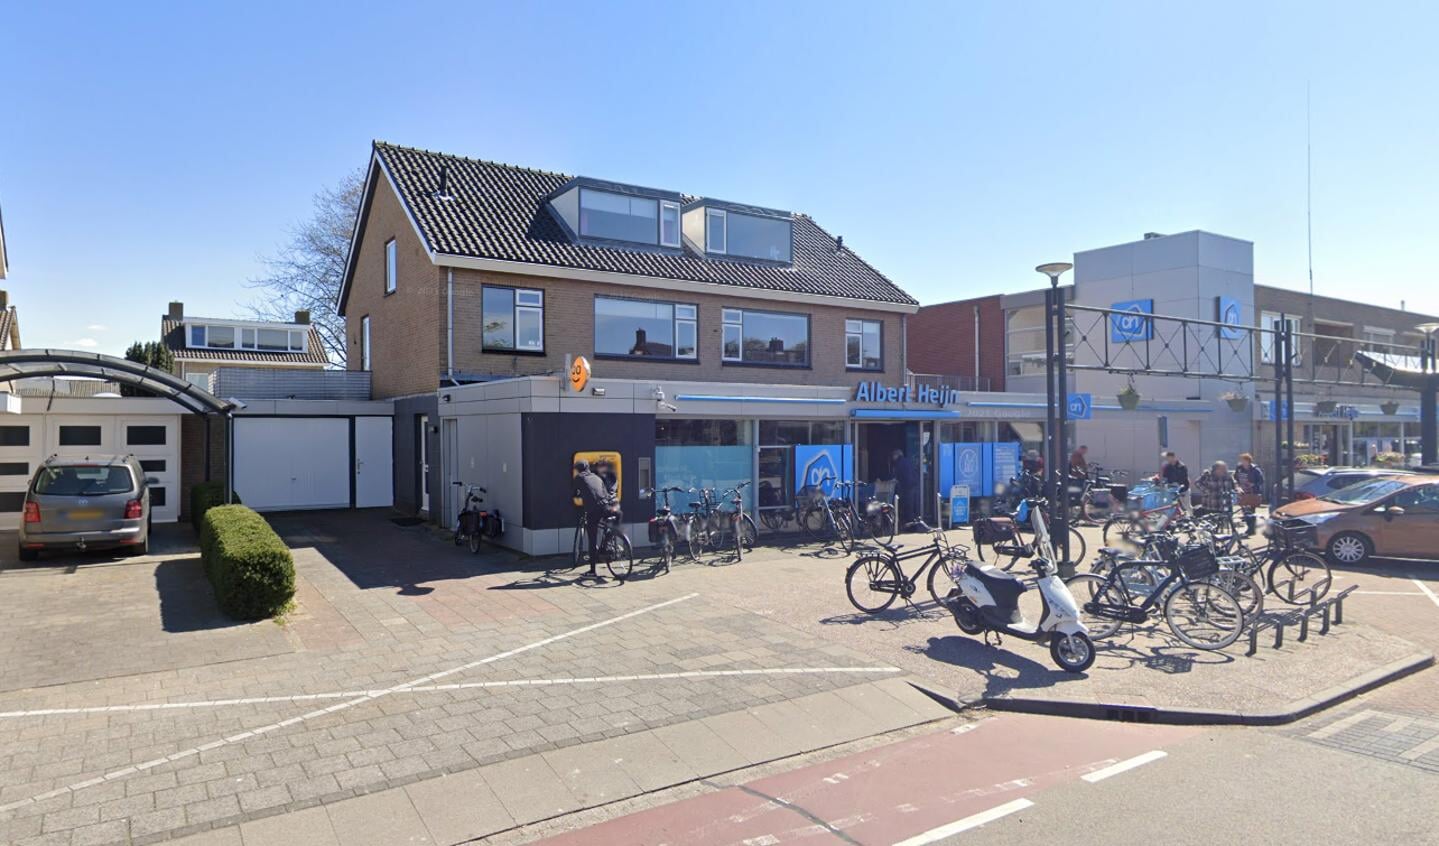 Lovinkstraat in Kampen.